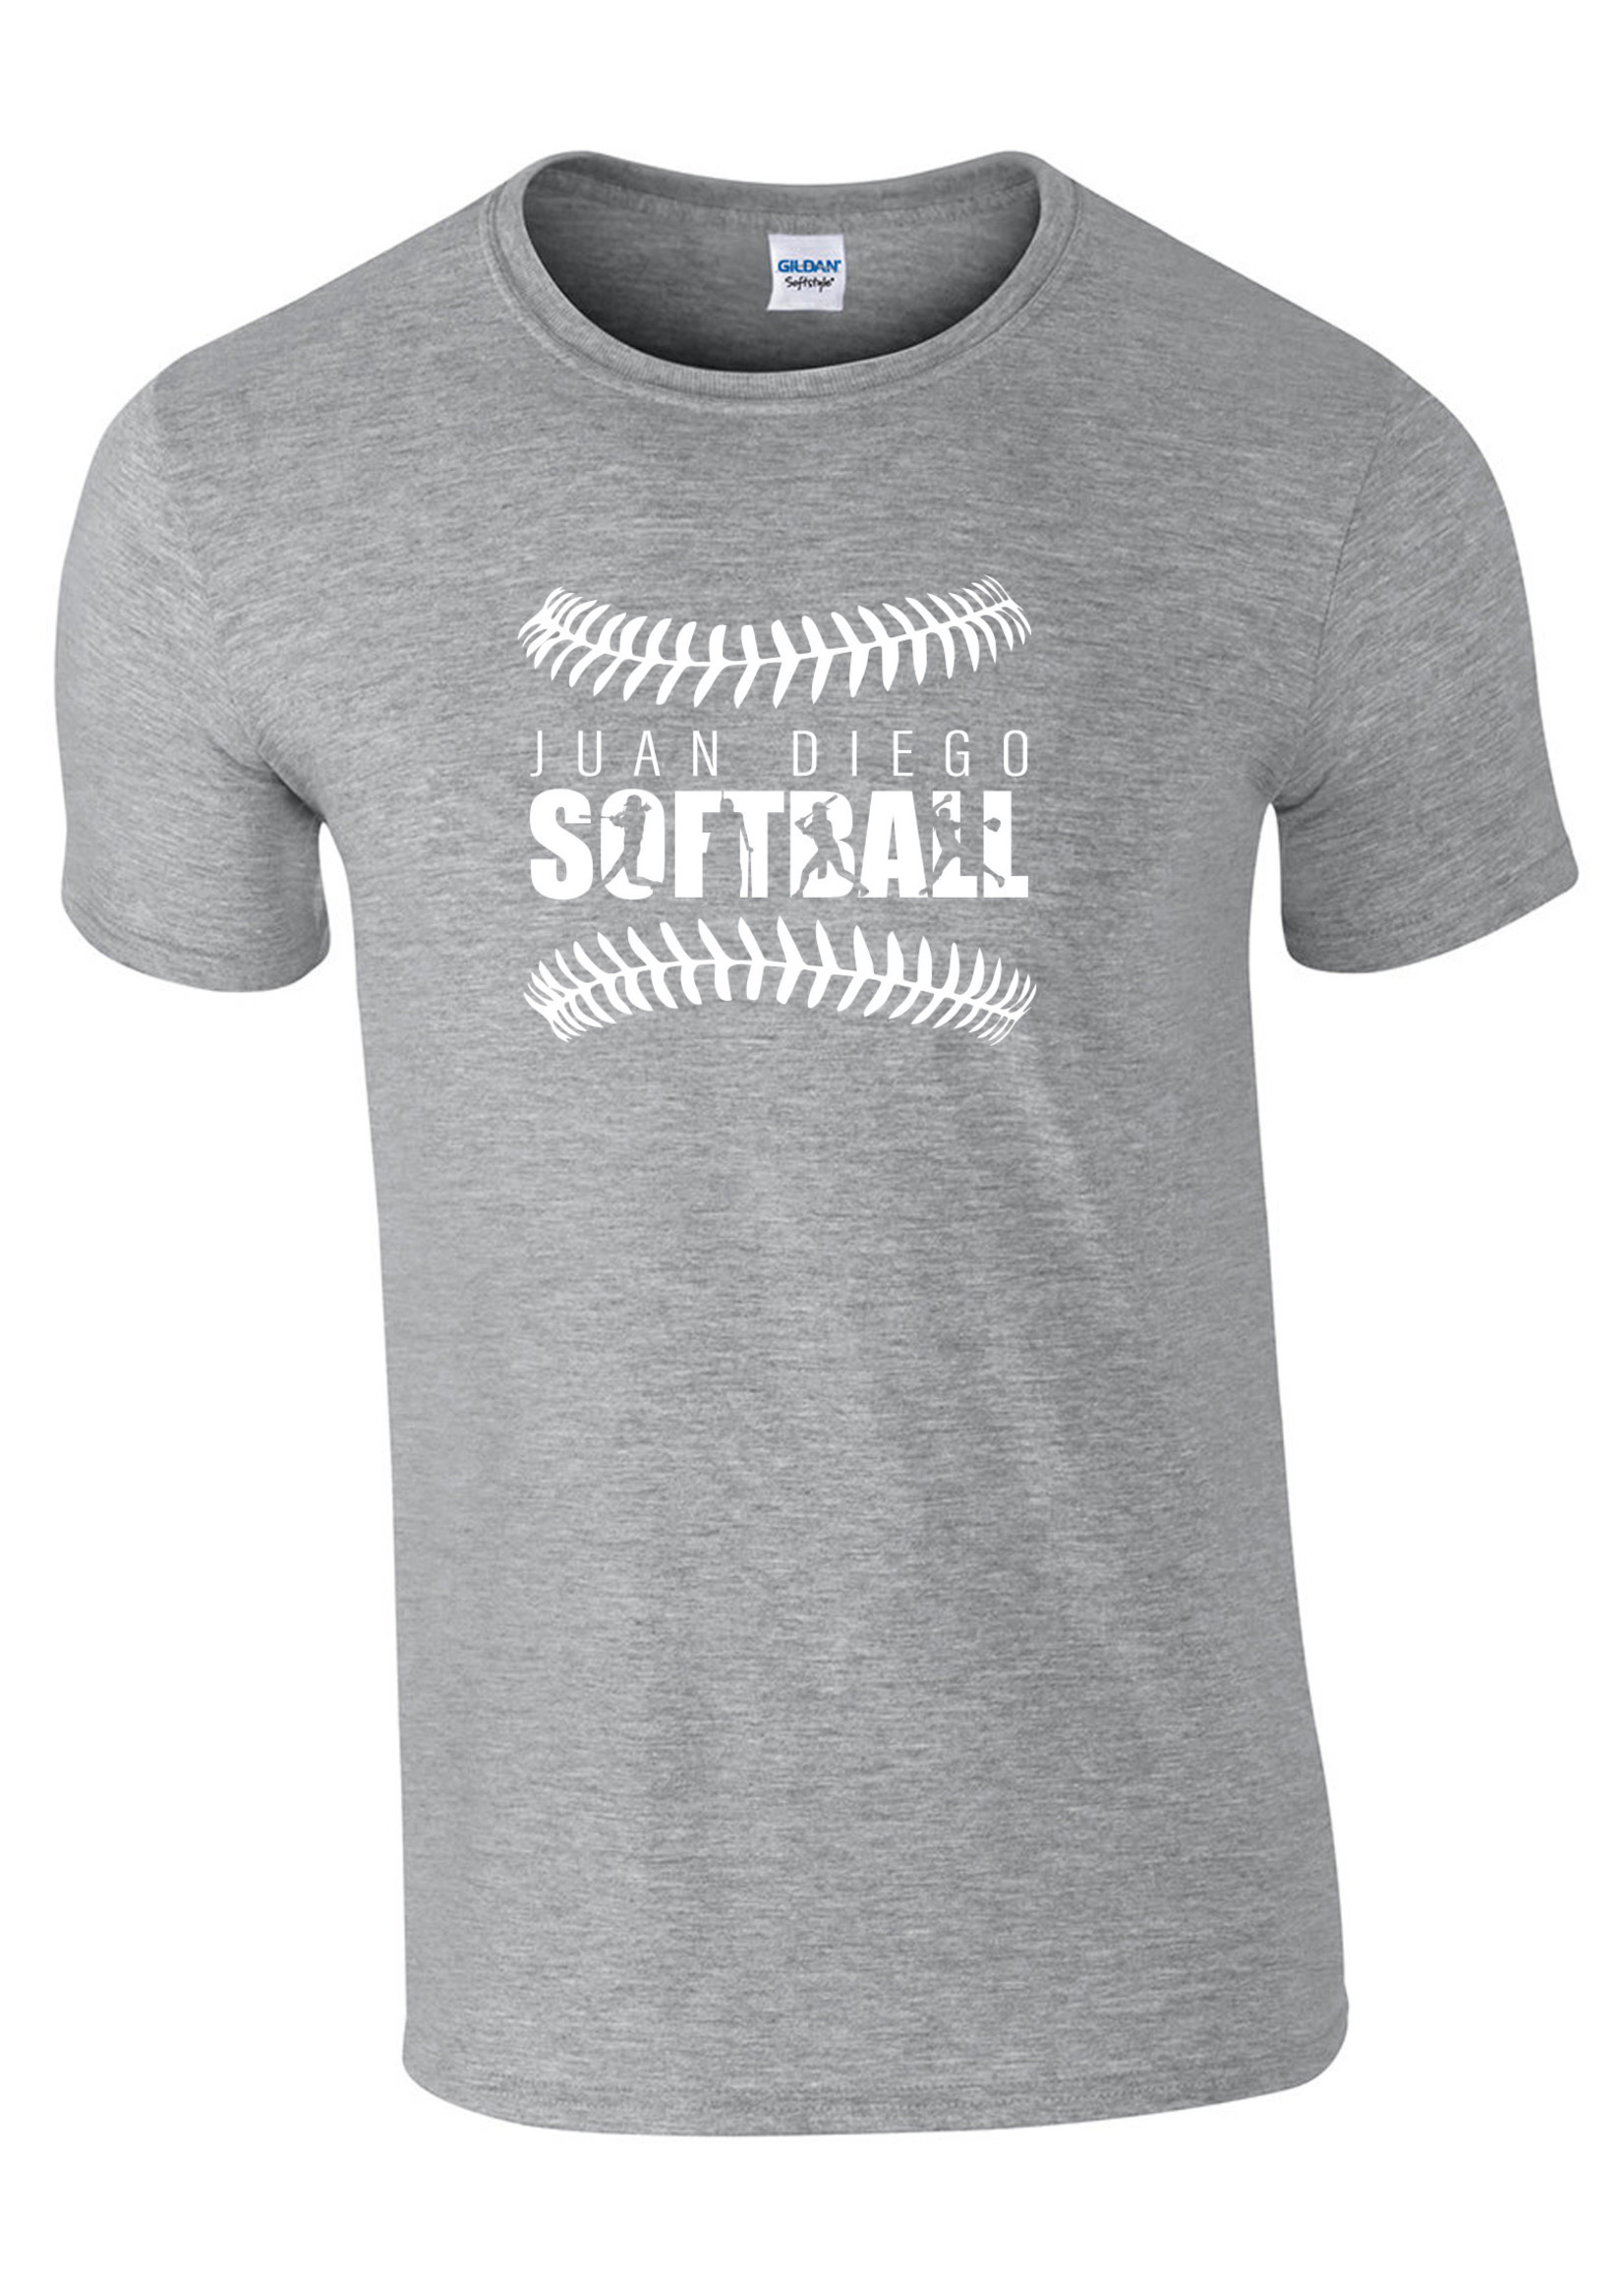 Custom T-Shirts for Church Softball - Shirt Design Ideas